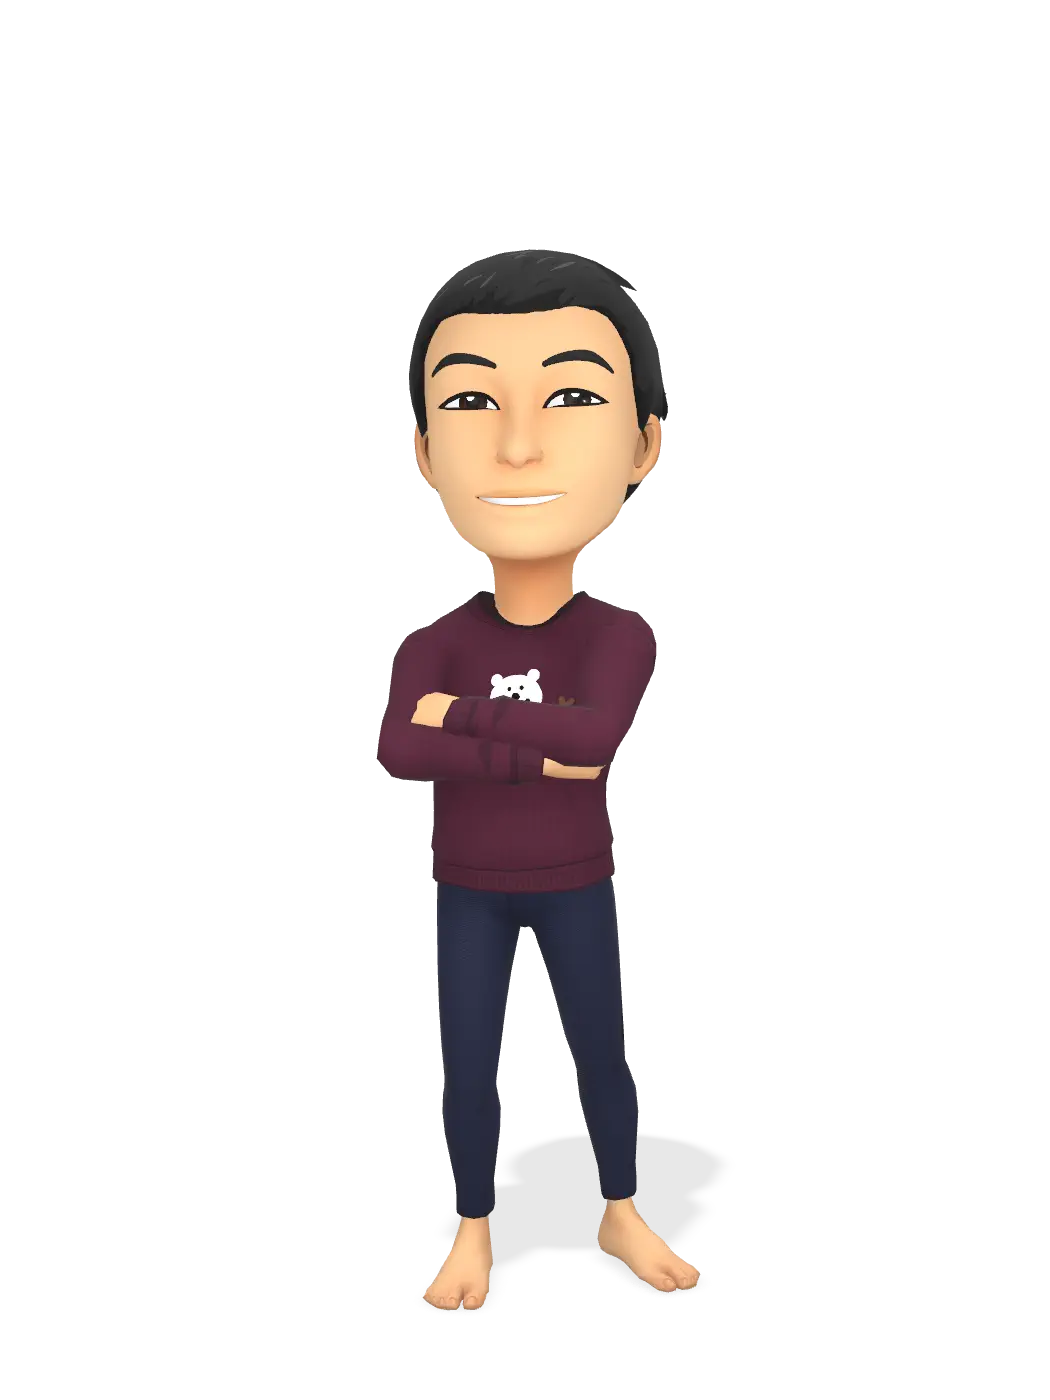 3D Bitmoji for bchenful avatar